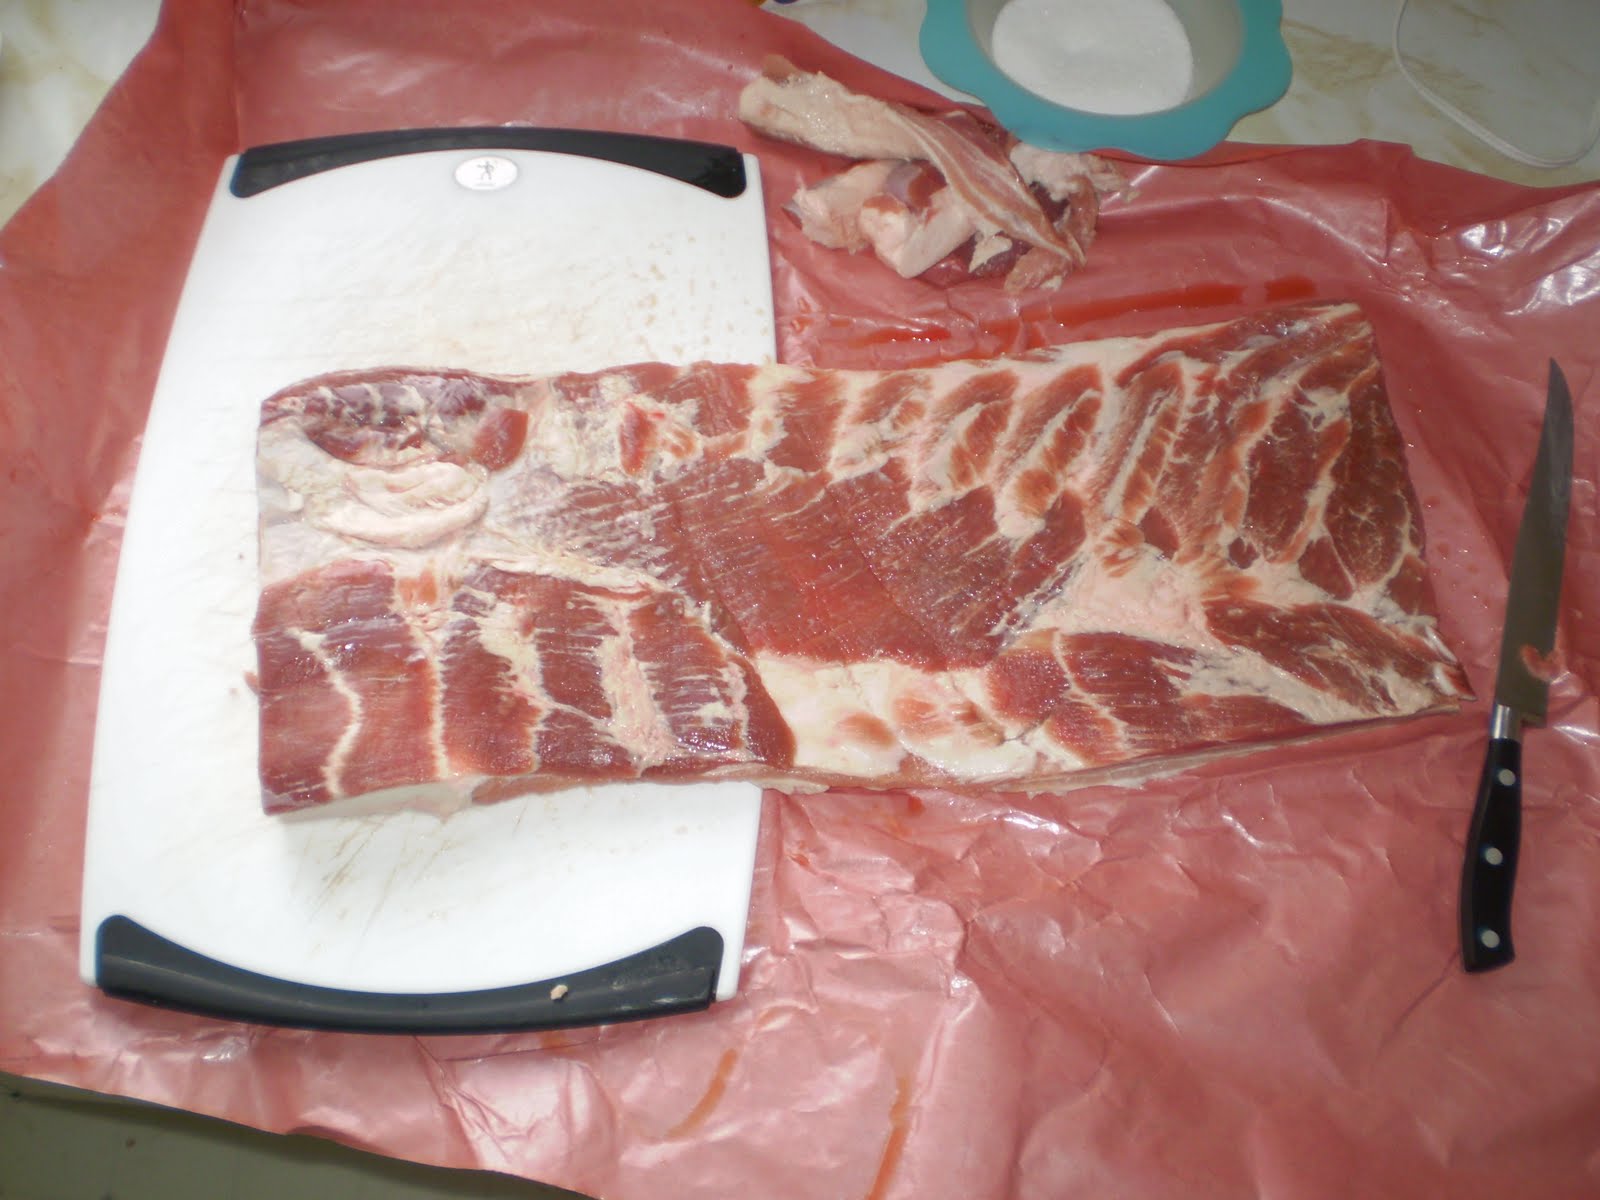 The raw pork belly